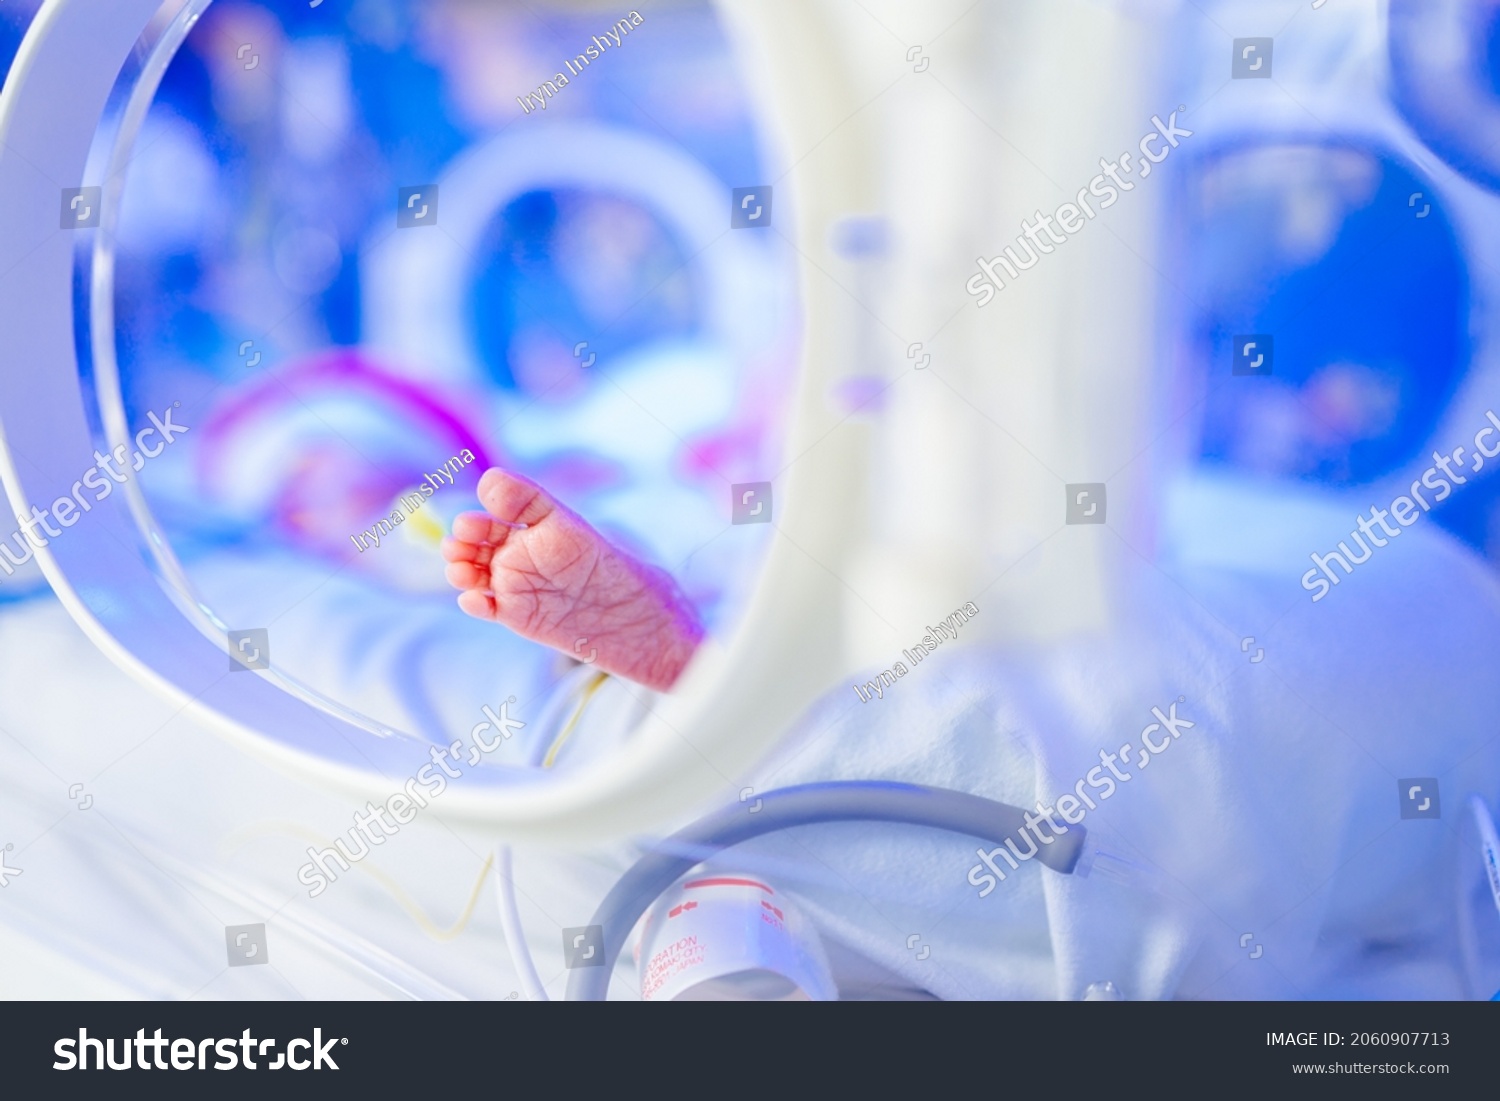 New born premature baby girl in intensive care unit in a medical incubator under ultraviolet lamp. Phototherapy treatment to reduce bilirubin levels in newborn jaundice. Neonatal icu. #2060907713